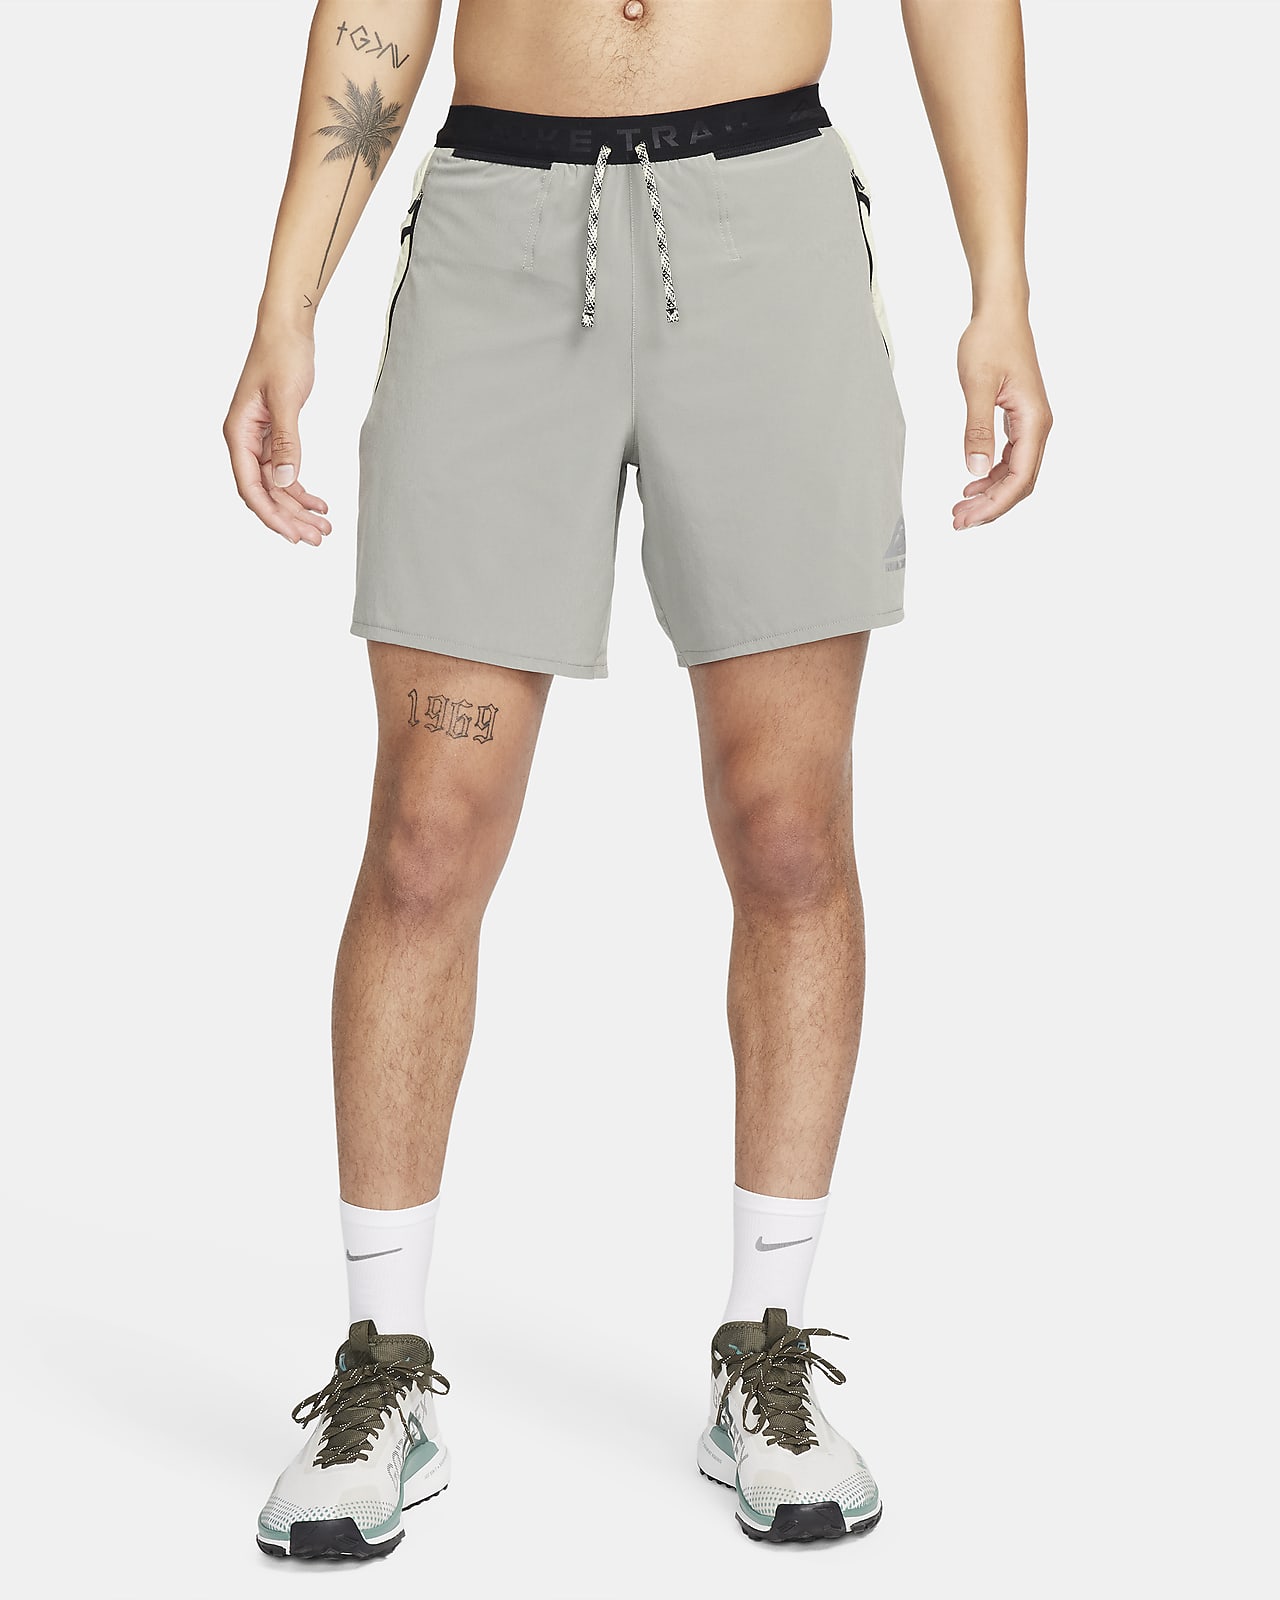 Mens Athletic Shorts Men's Hiking Cargo Shorts with 6 Pockets